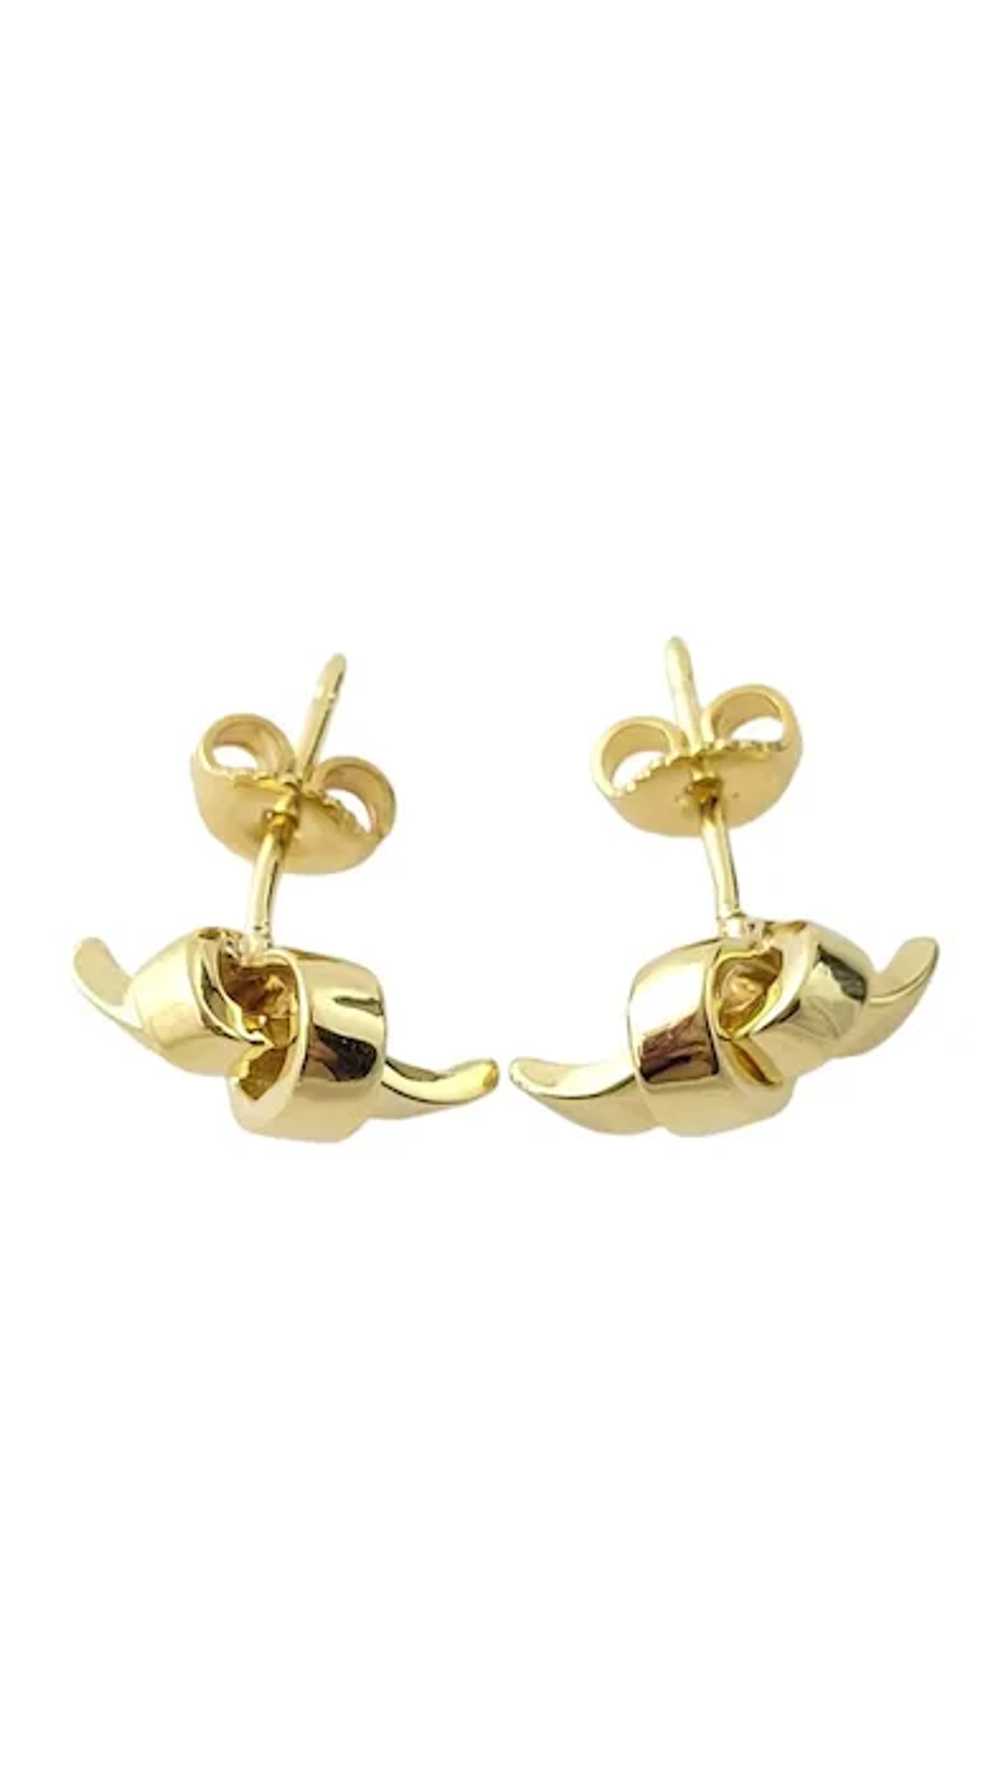 18K Yellow Gold Bow Stud Earrings #16874 - image 2